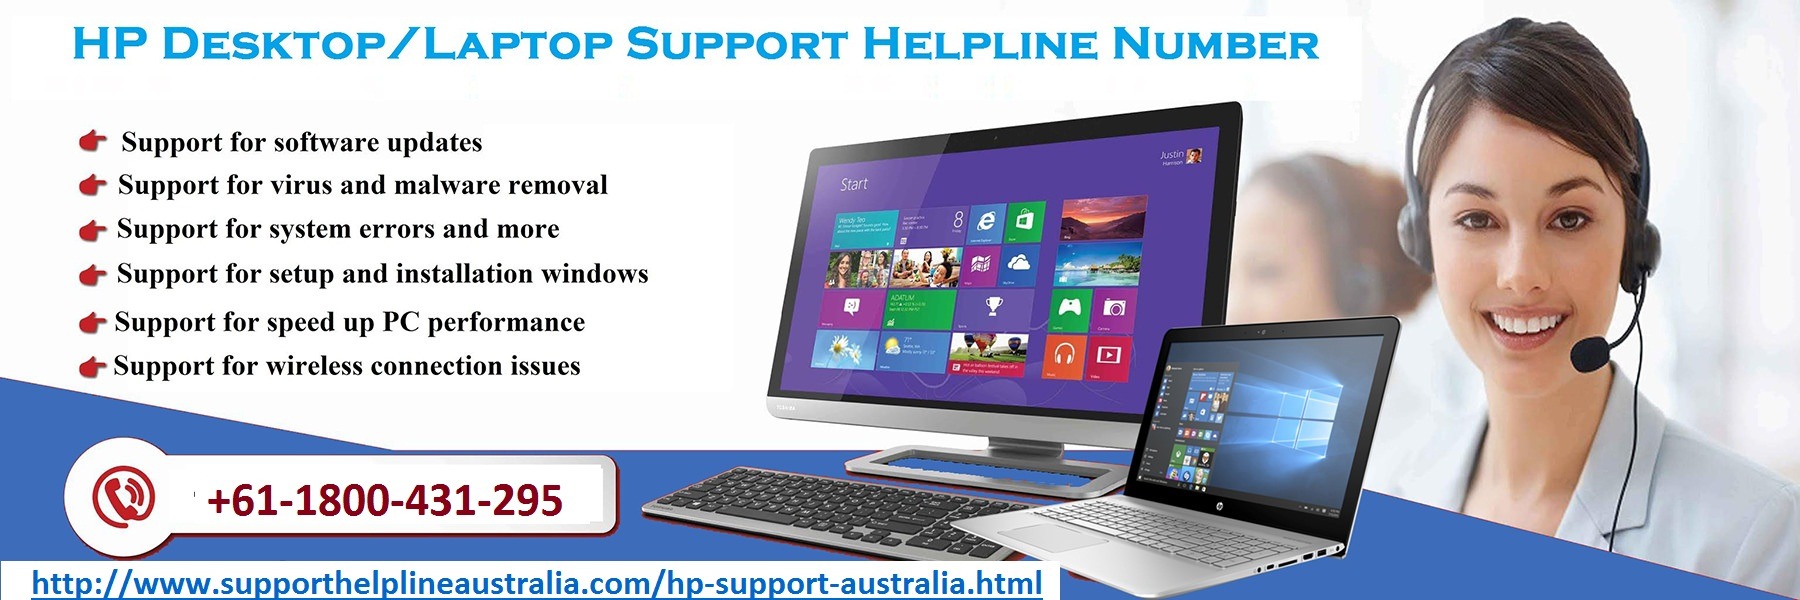 Ноутбук support